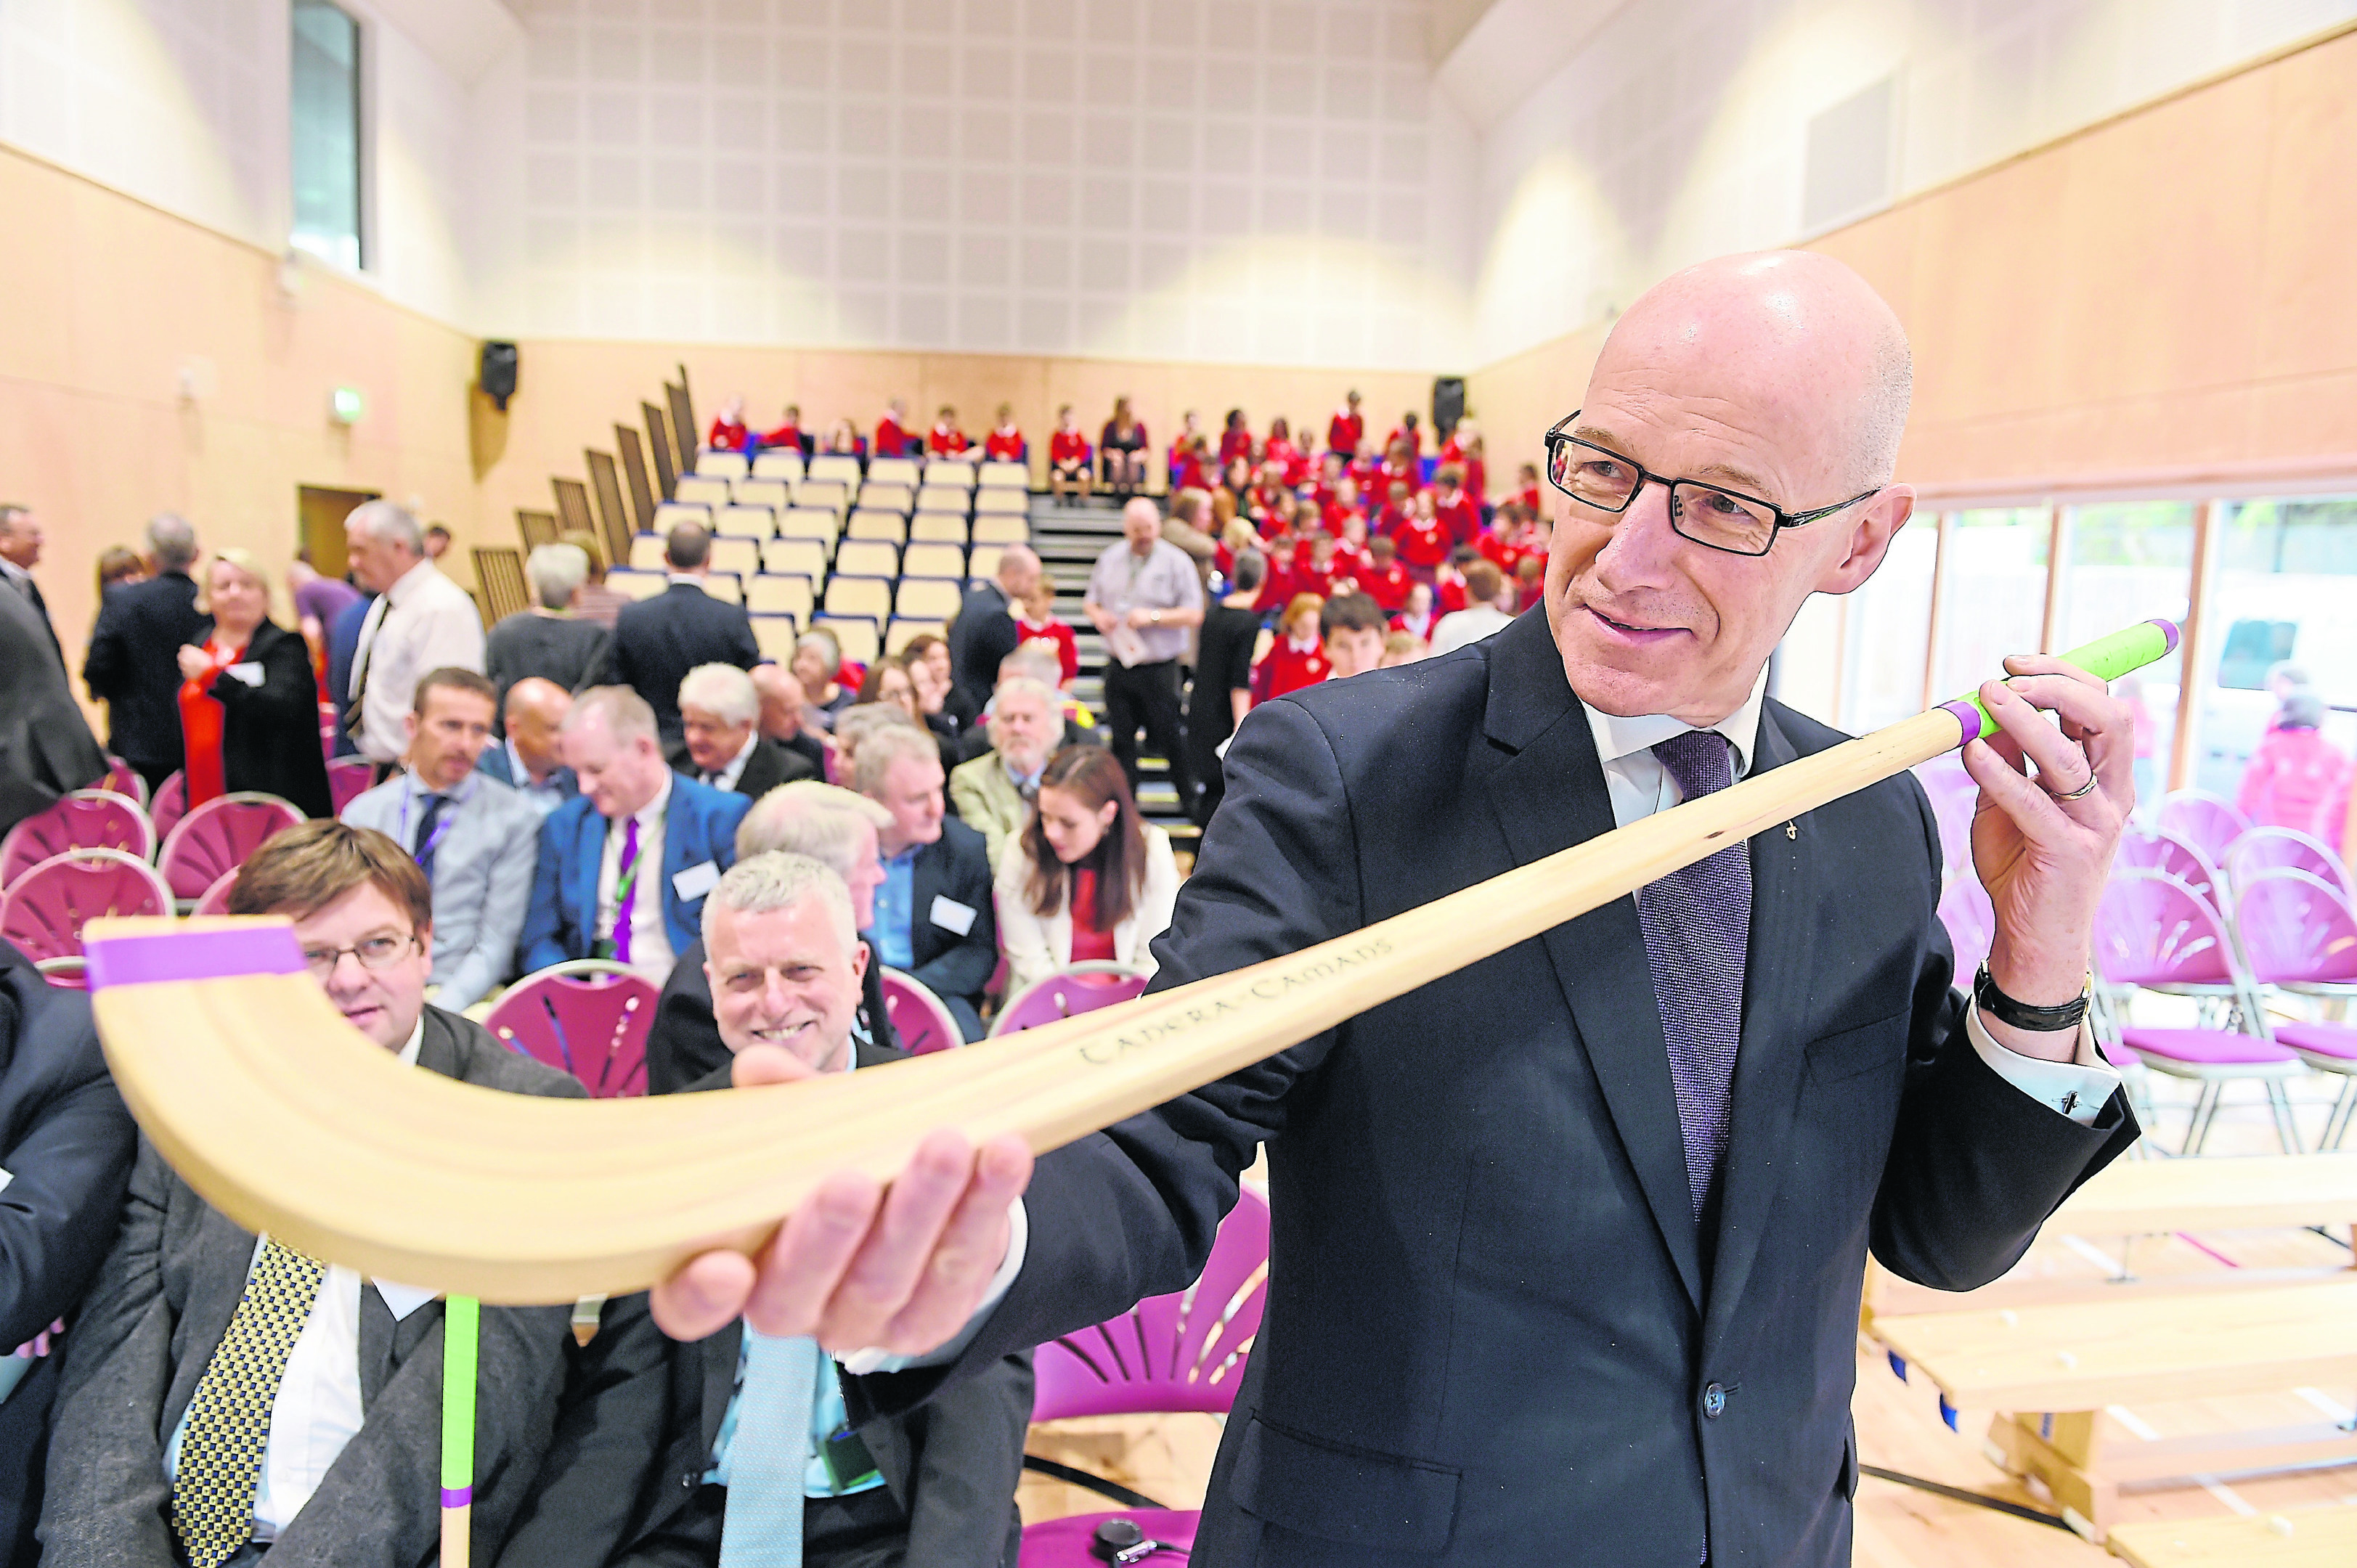 Dewputy Firstr Minister and Secretary for Education, John Swinney yestereday oficially openned the new Gaelic Medium Primary School in Portree, Skye.